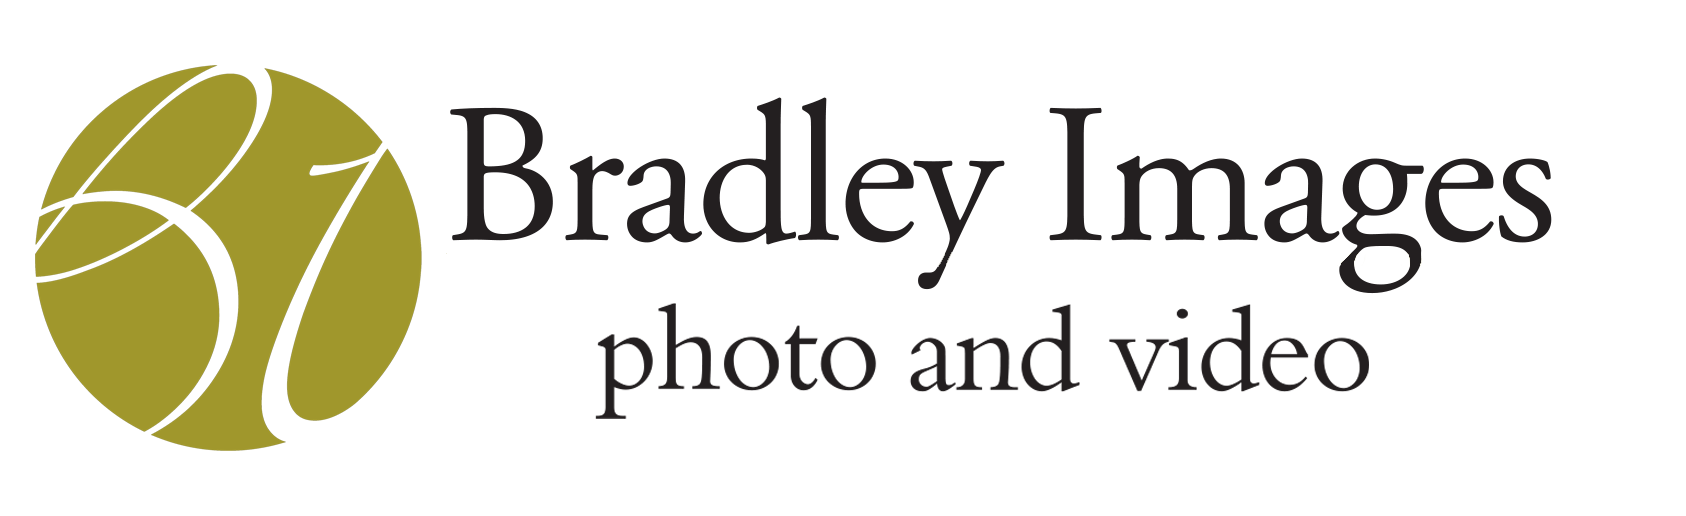 Bradley Images